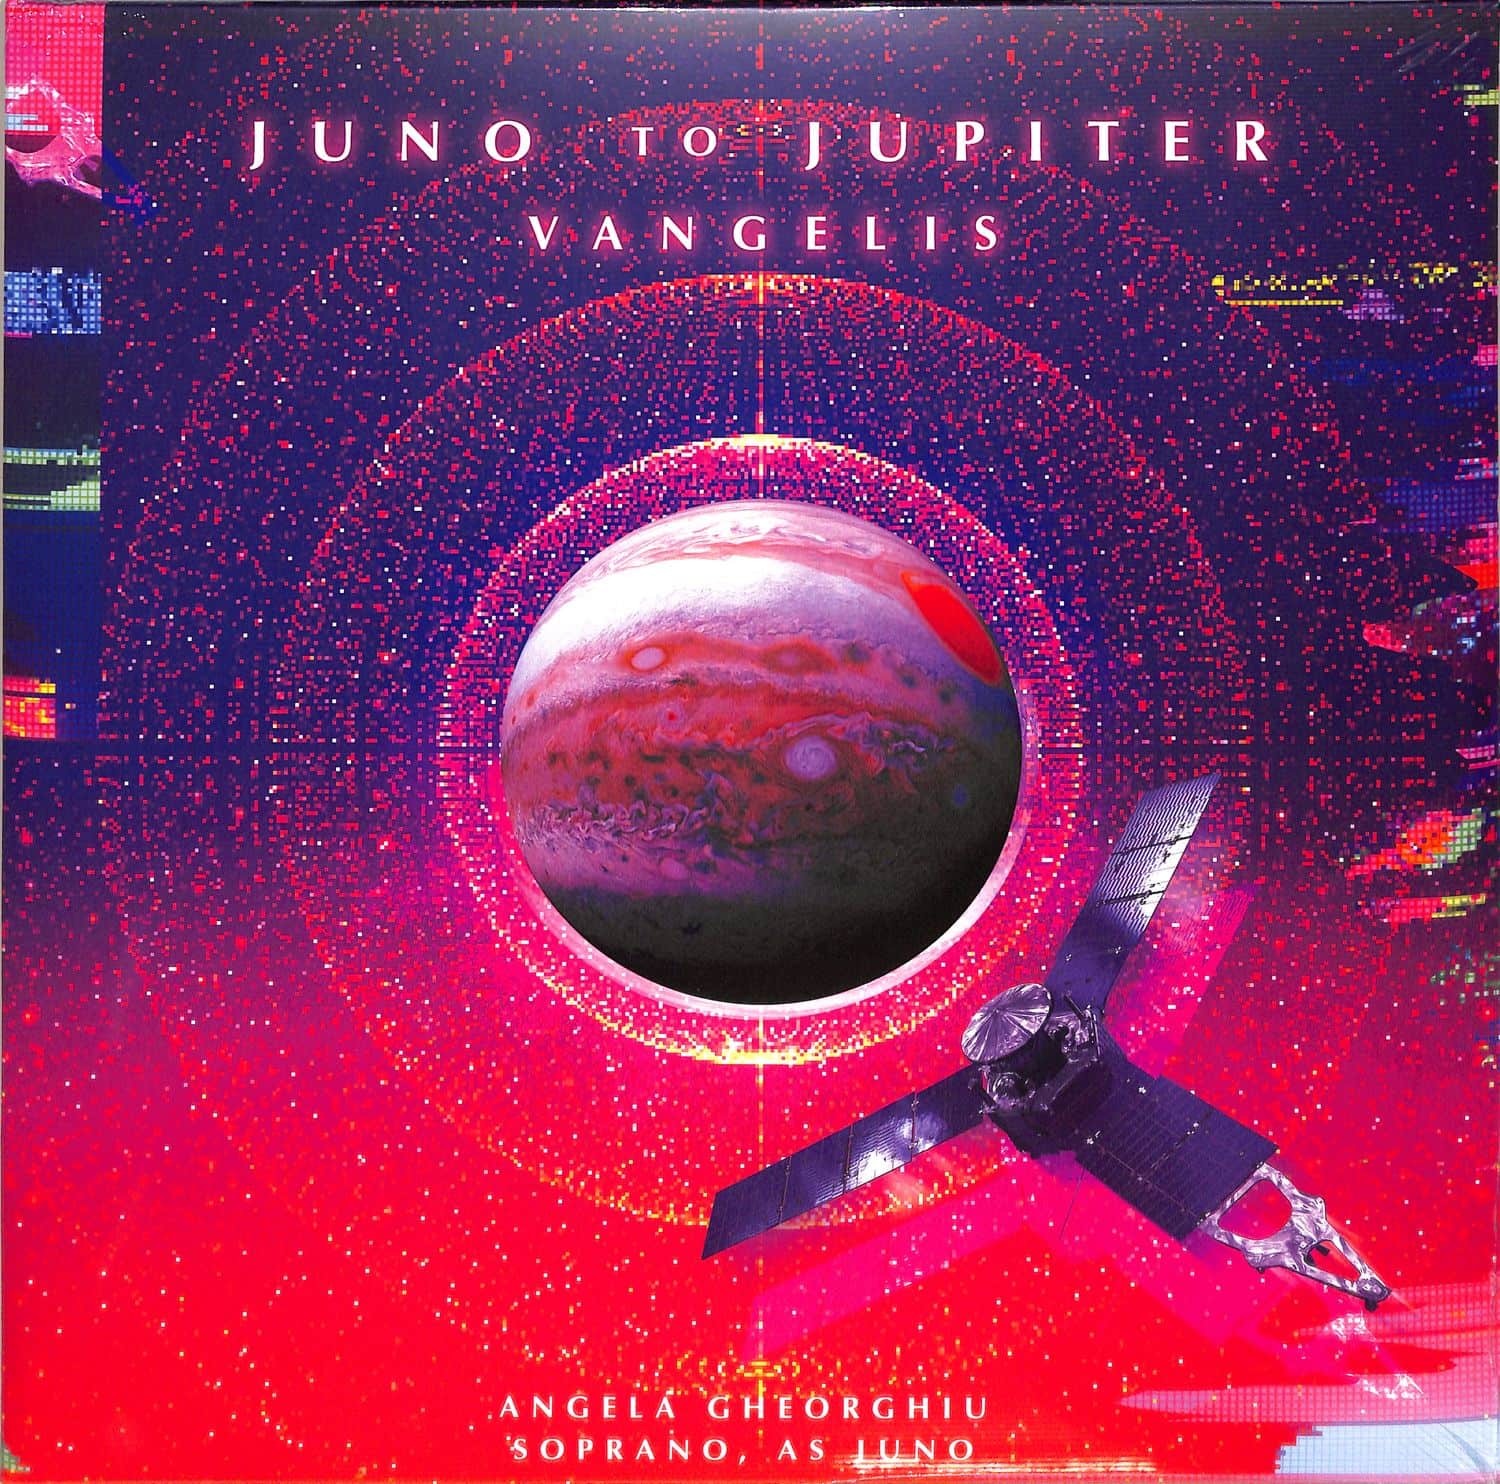 Vangelis - JUNO TO JUPITER 